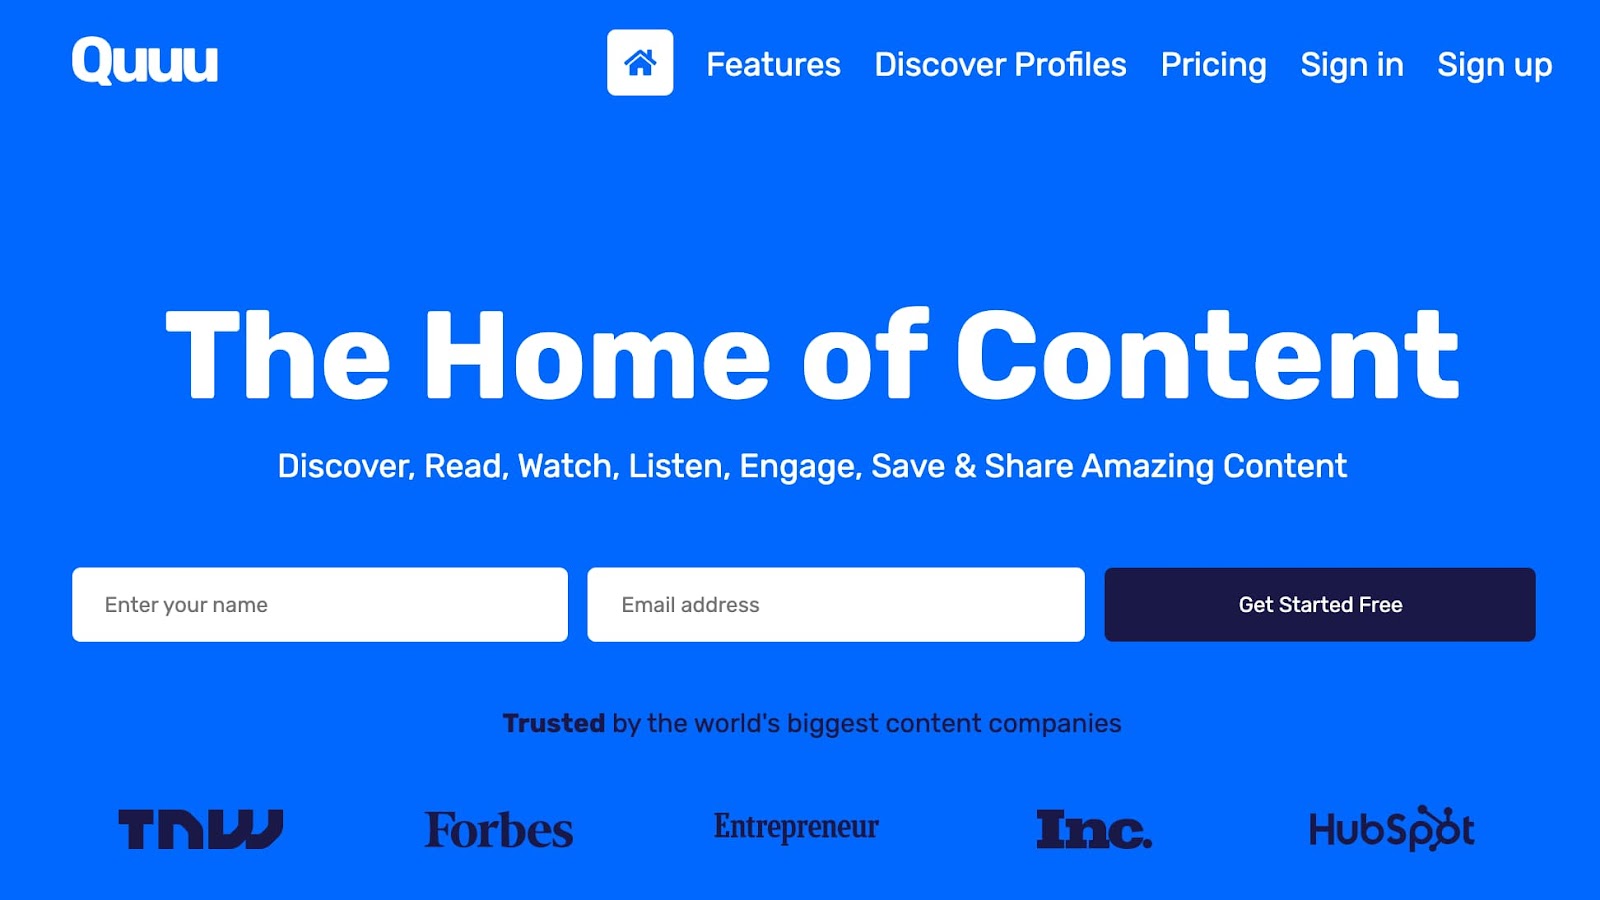 Content curation tool Quuu